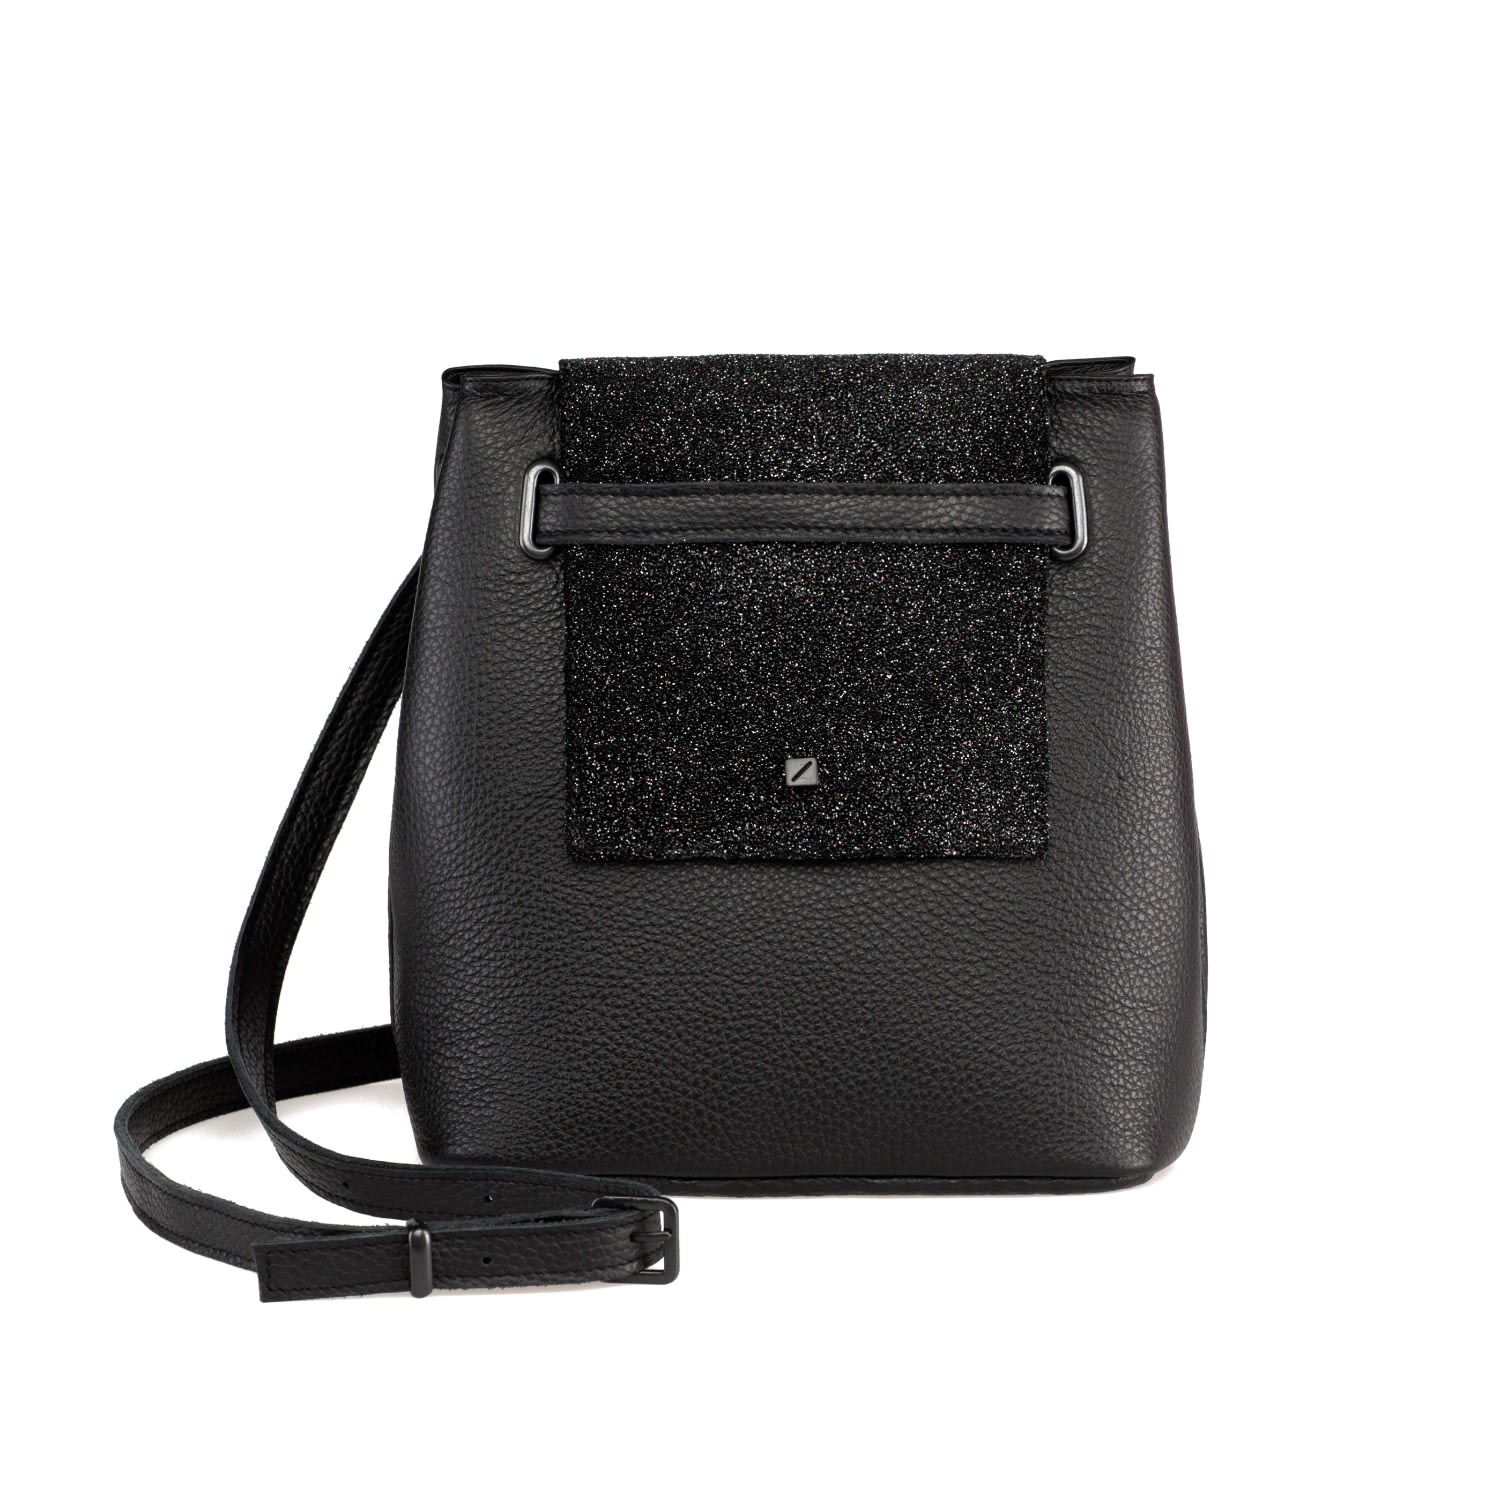 Maria Maleta - Mini Bucket Shoulder or Handbag in Black Leather